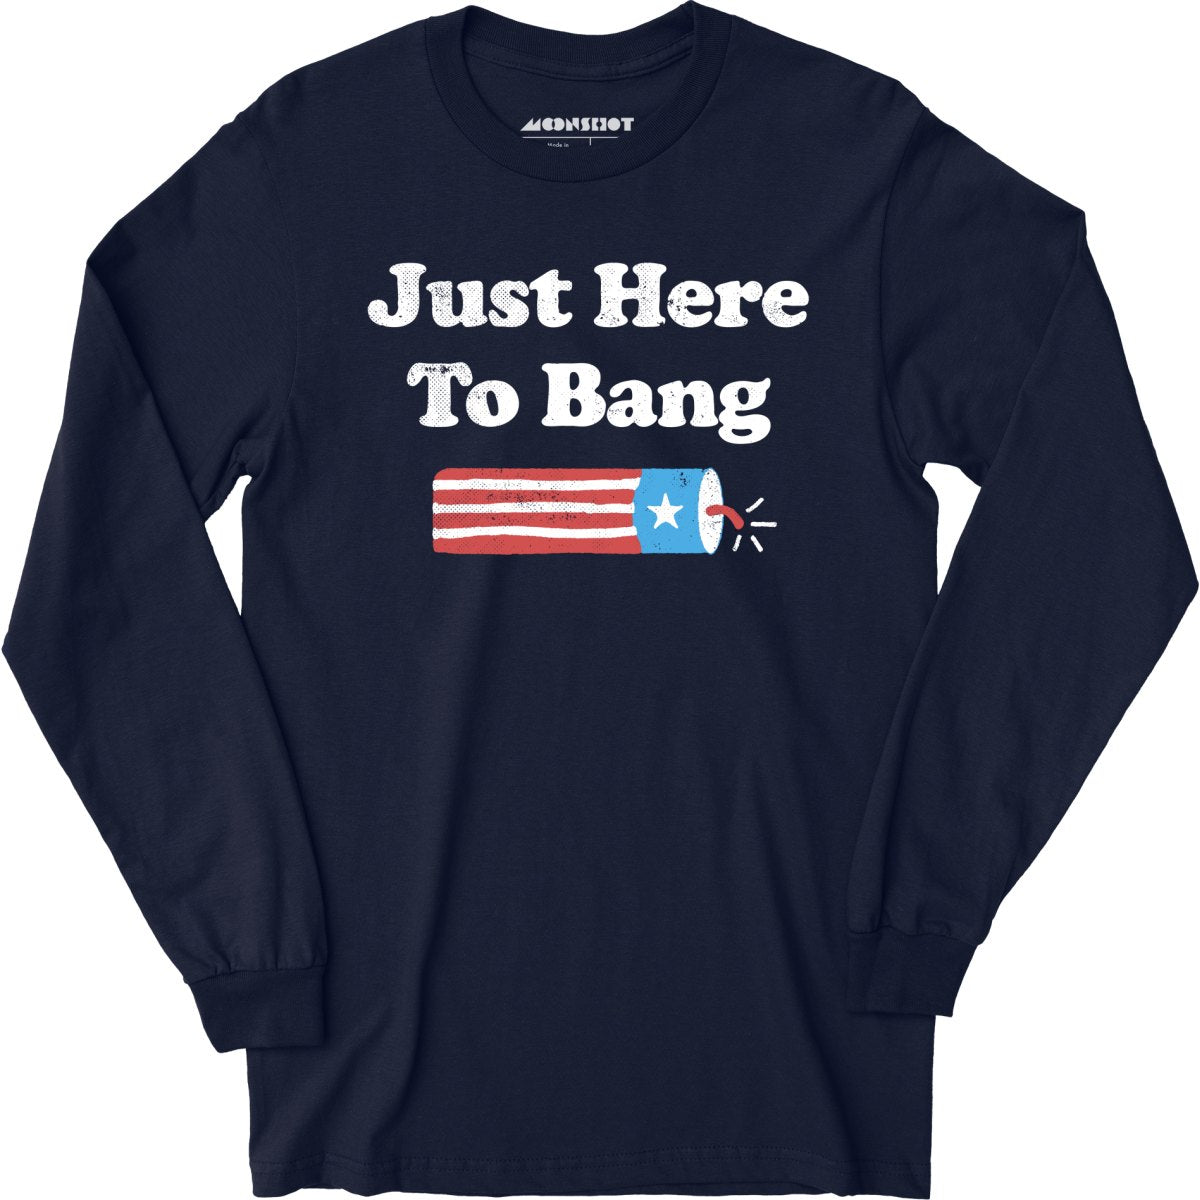 Just Here to Bang - Long Sleeve T-Shirt